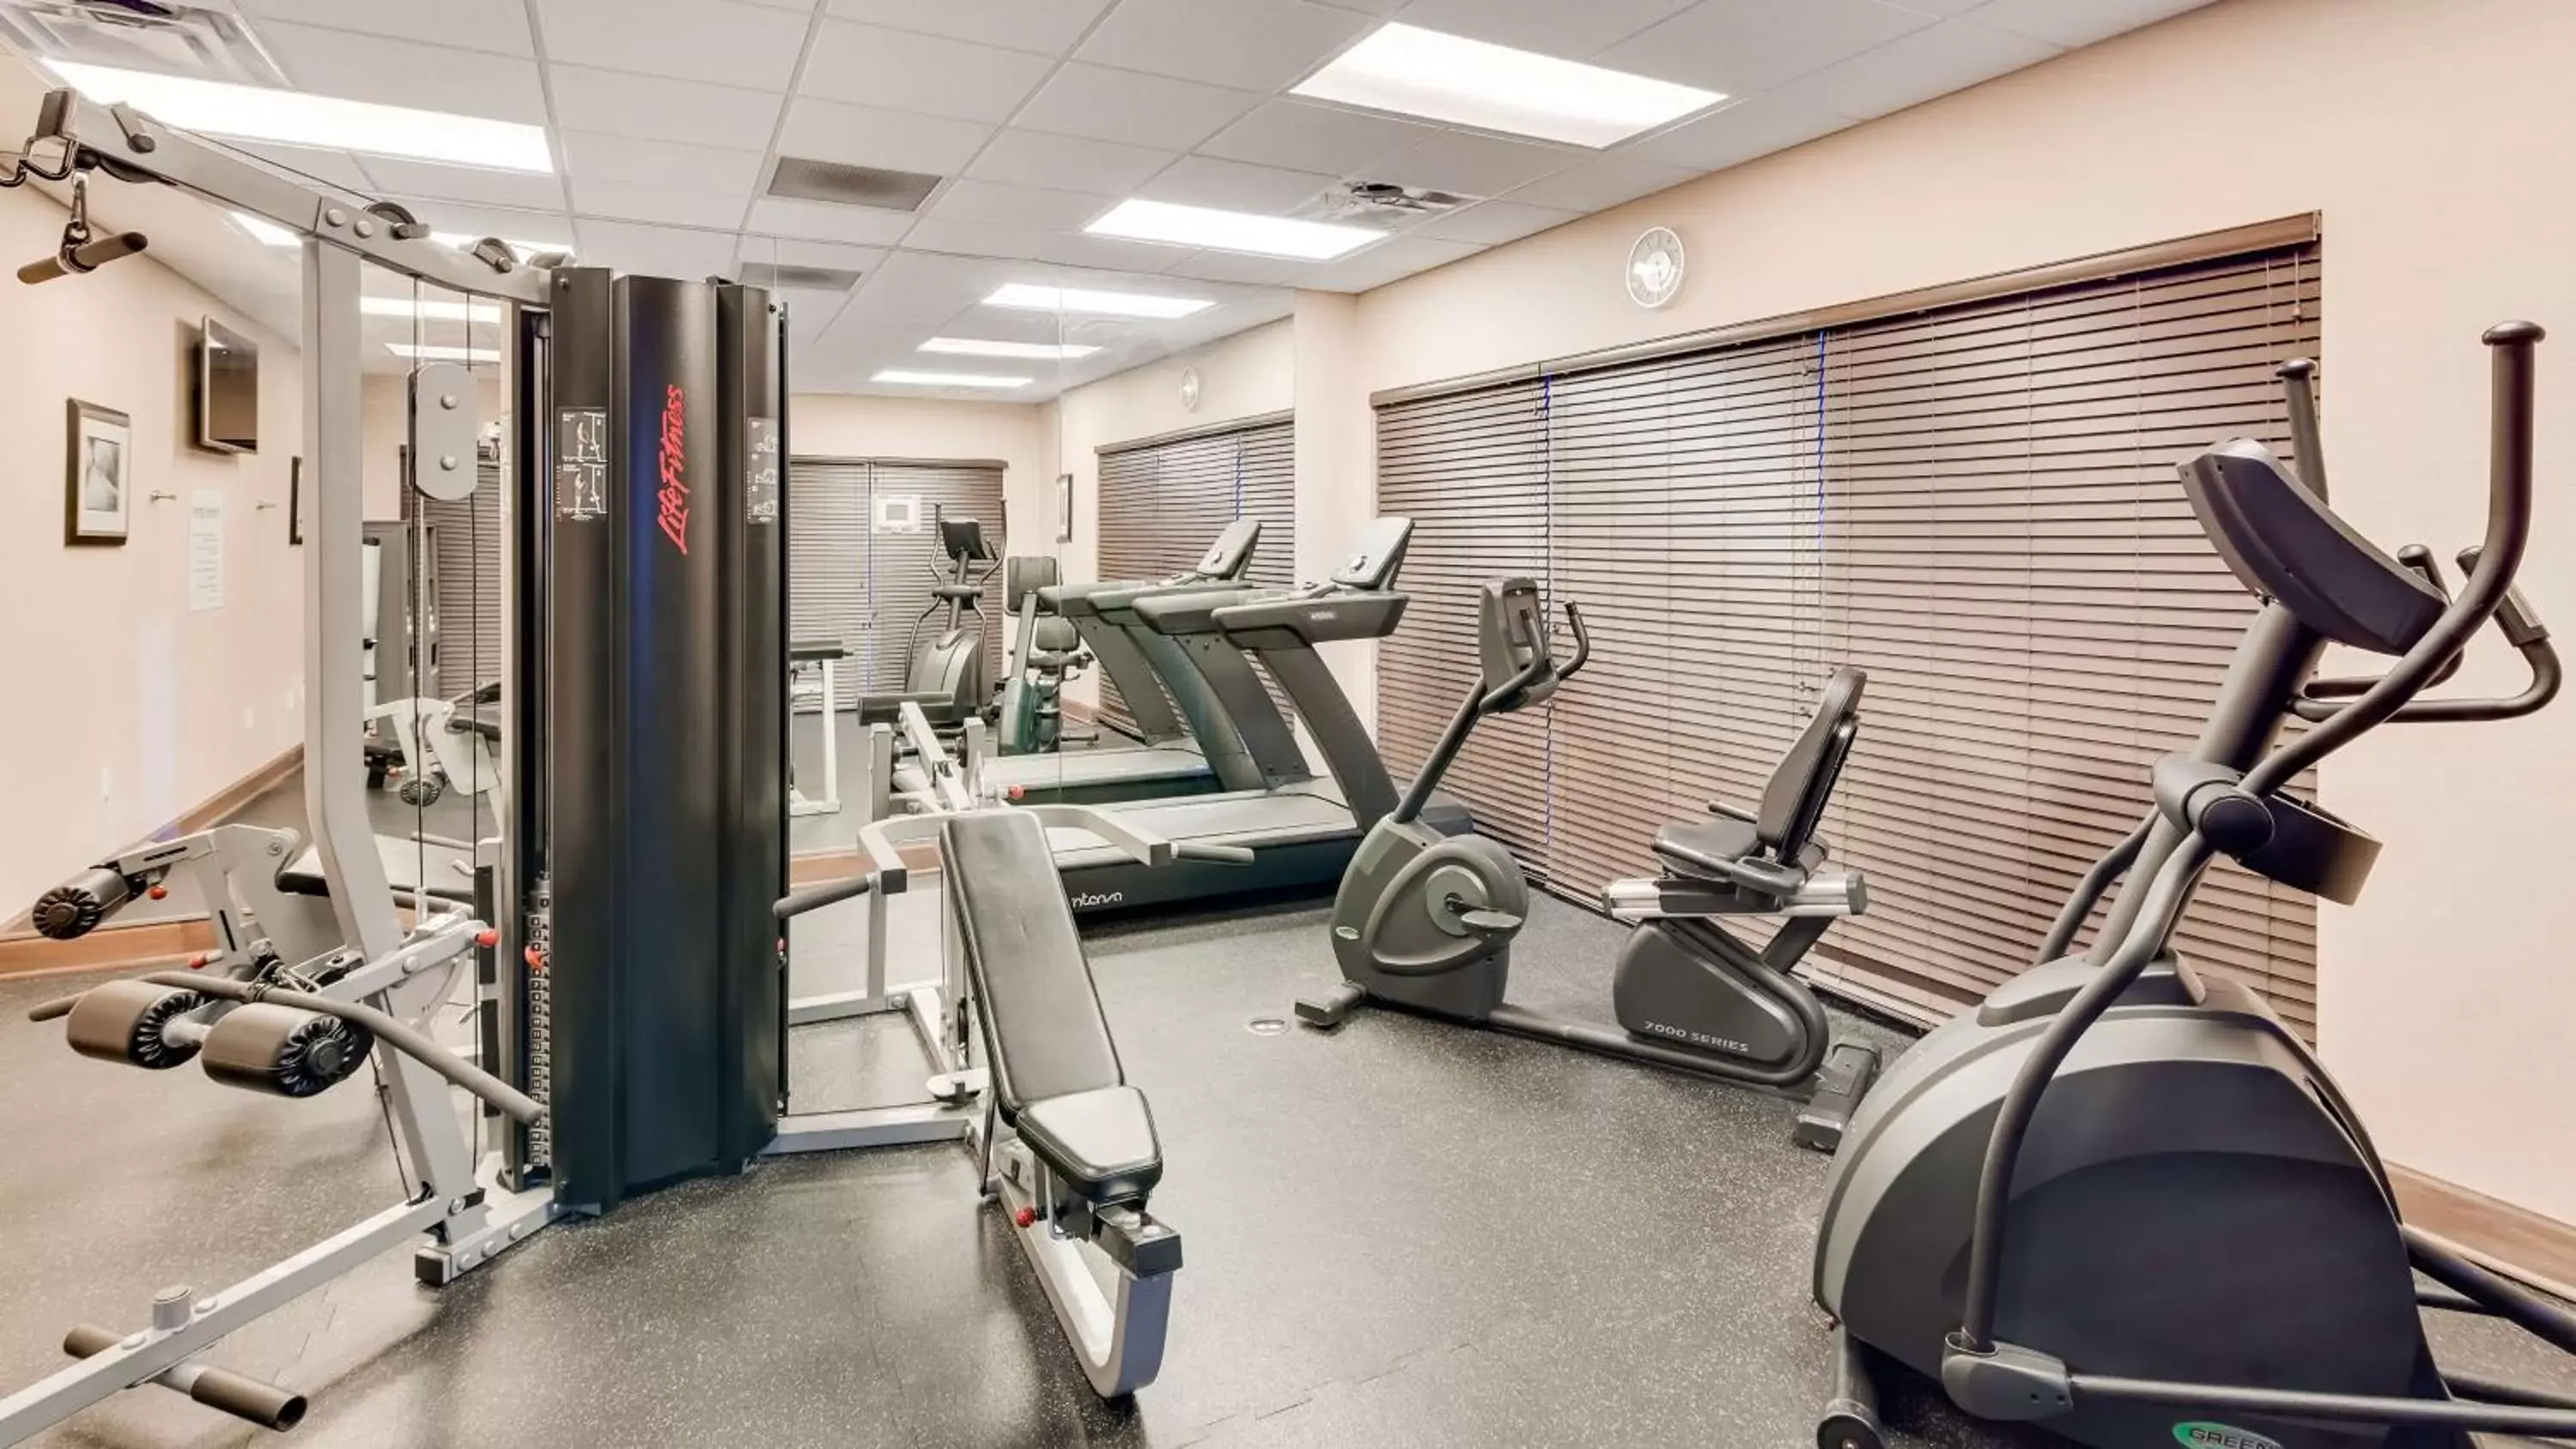 Fitness centre/facilities, Fitness Center/Facilities in Best Western Plus Atrium Inn & Suites